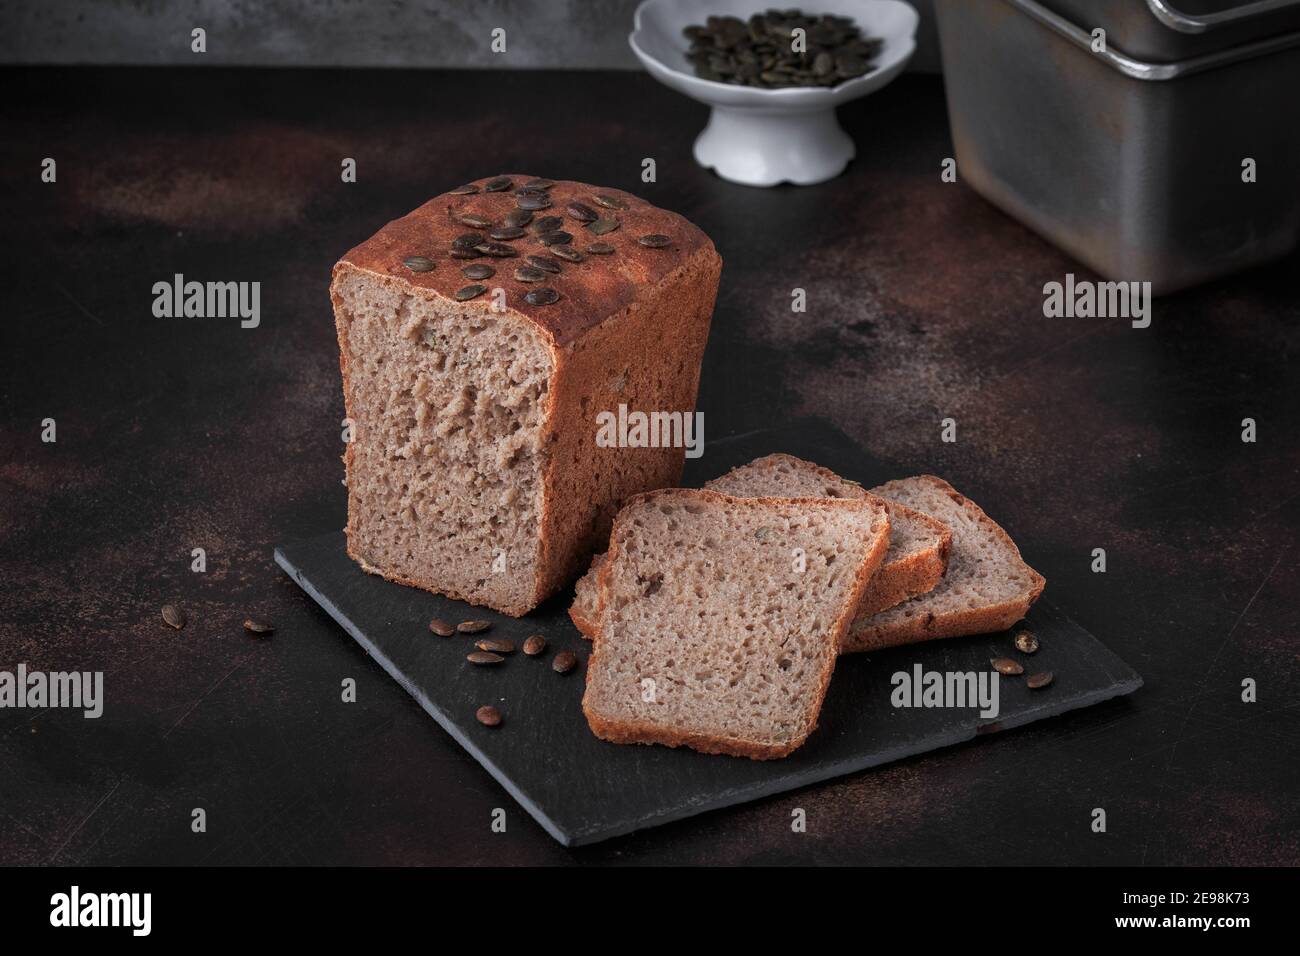 Pan de semillas multigrano casero. Pan de desayuno de grano entero sembrado Foto de stock